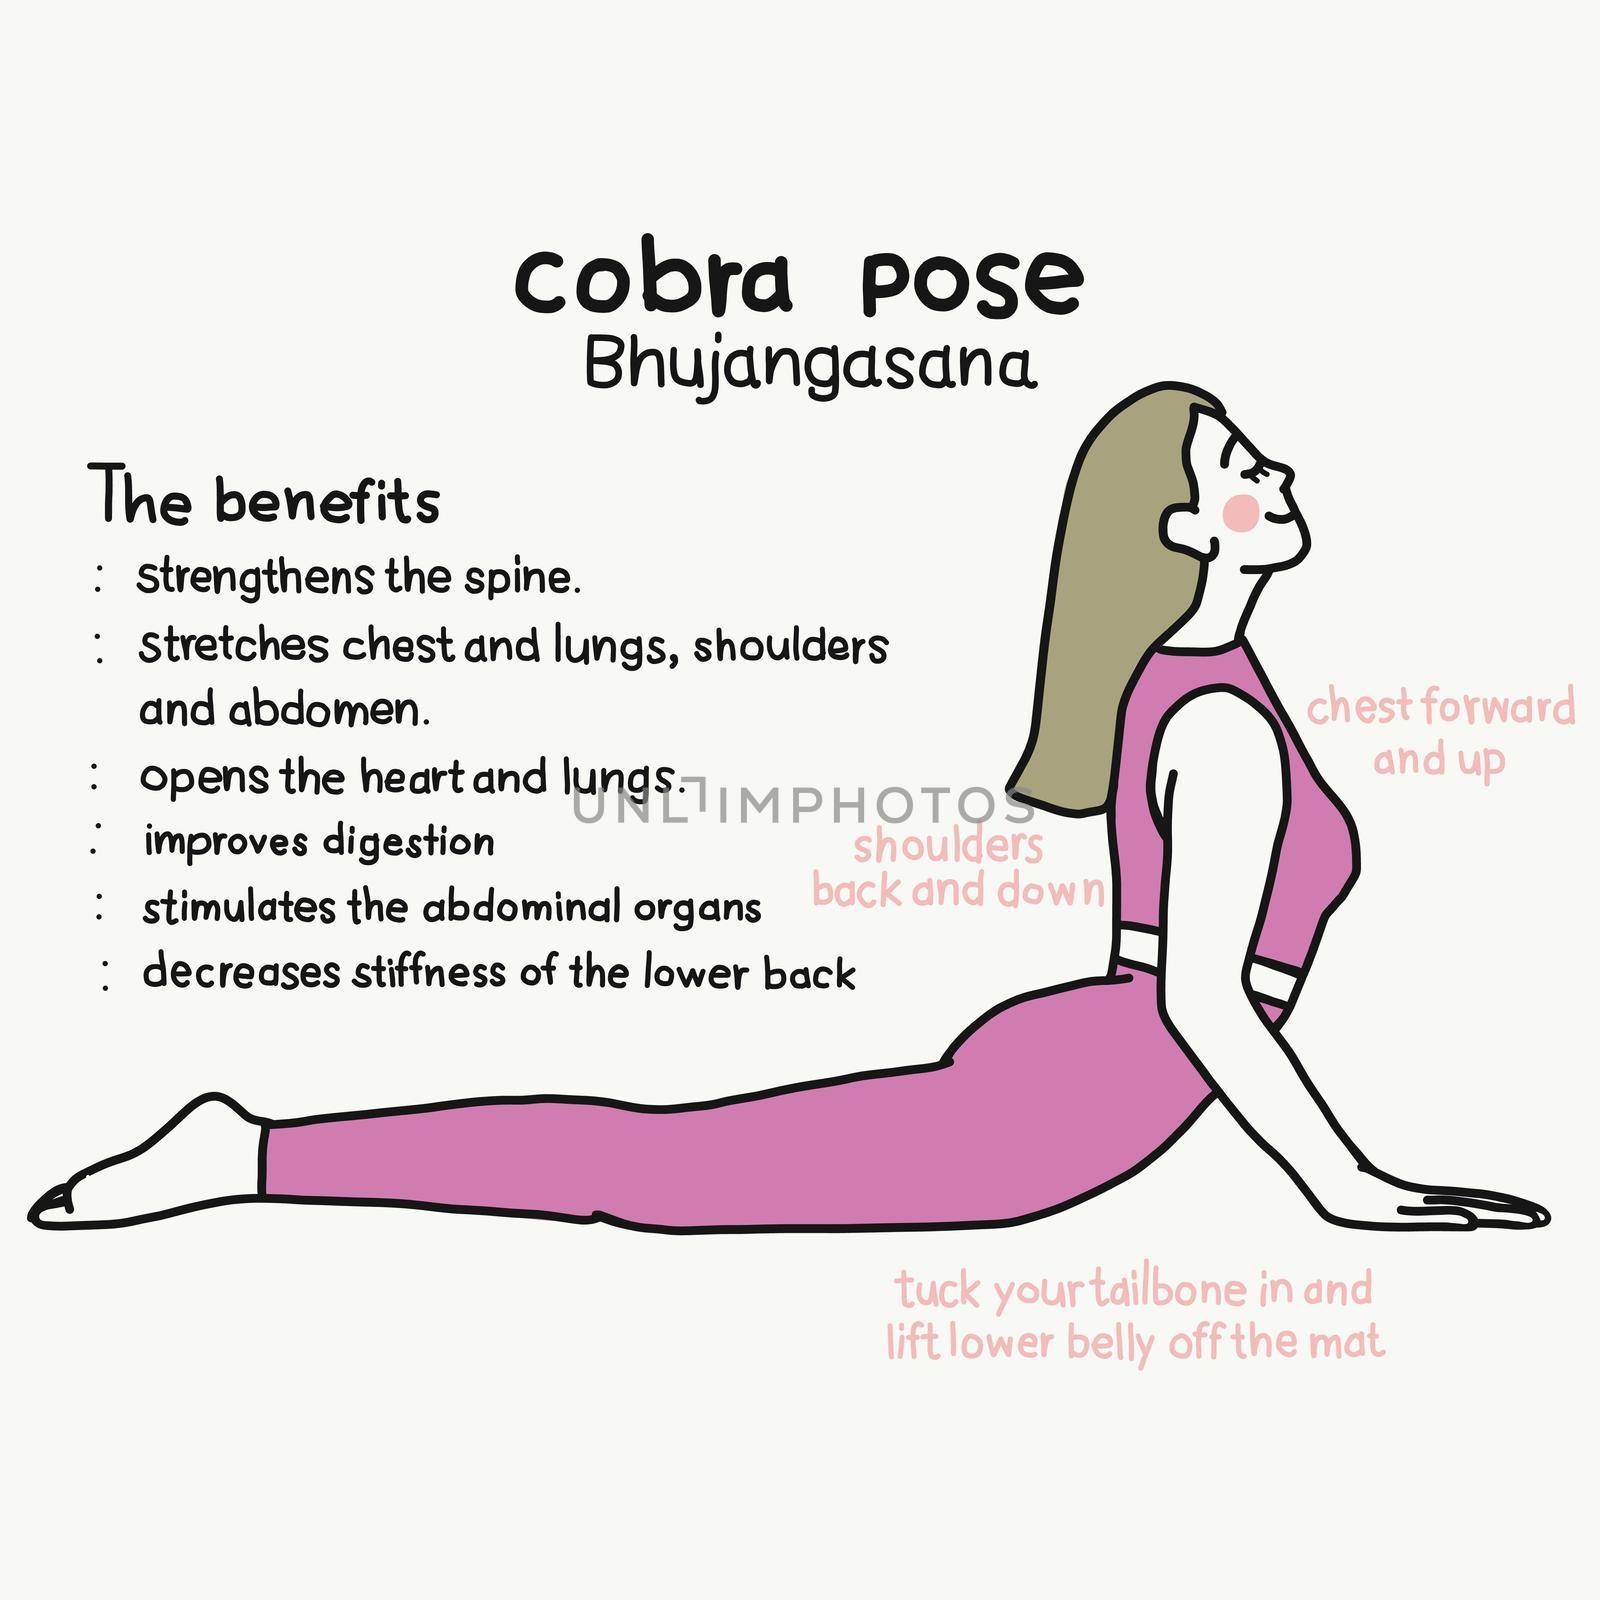 Cobra yoga pose and benefits cartoon vector illustration